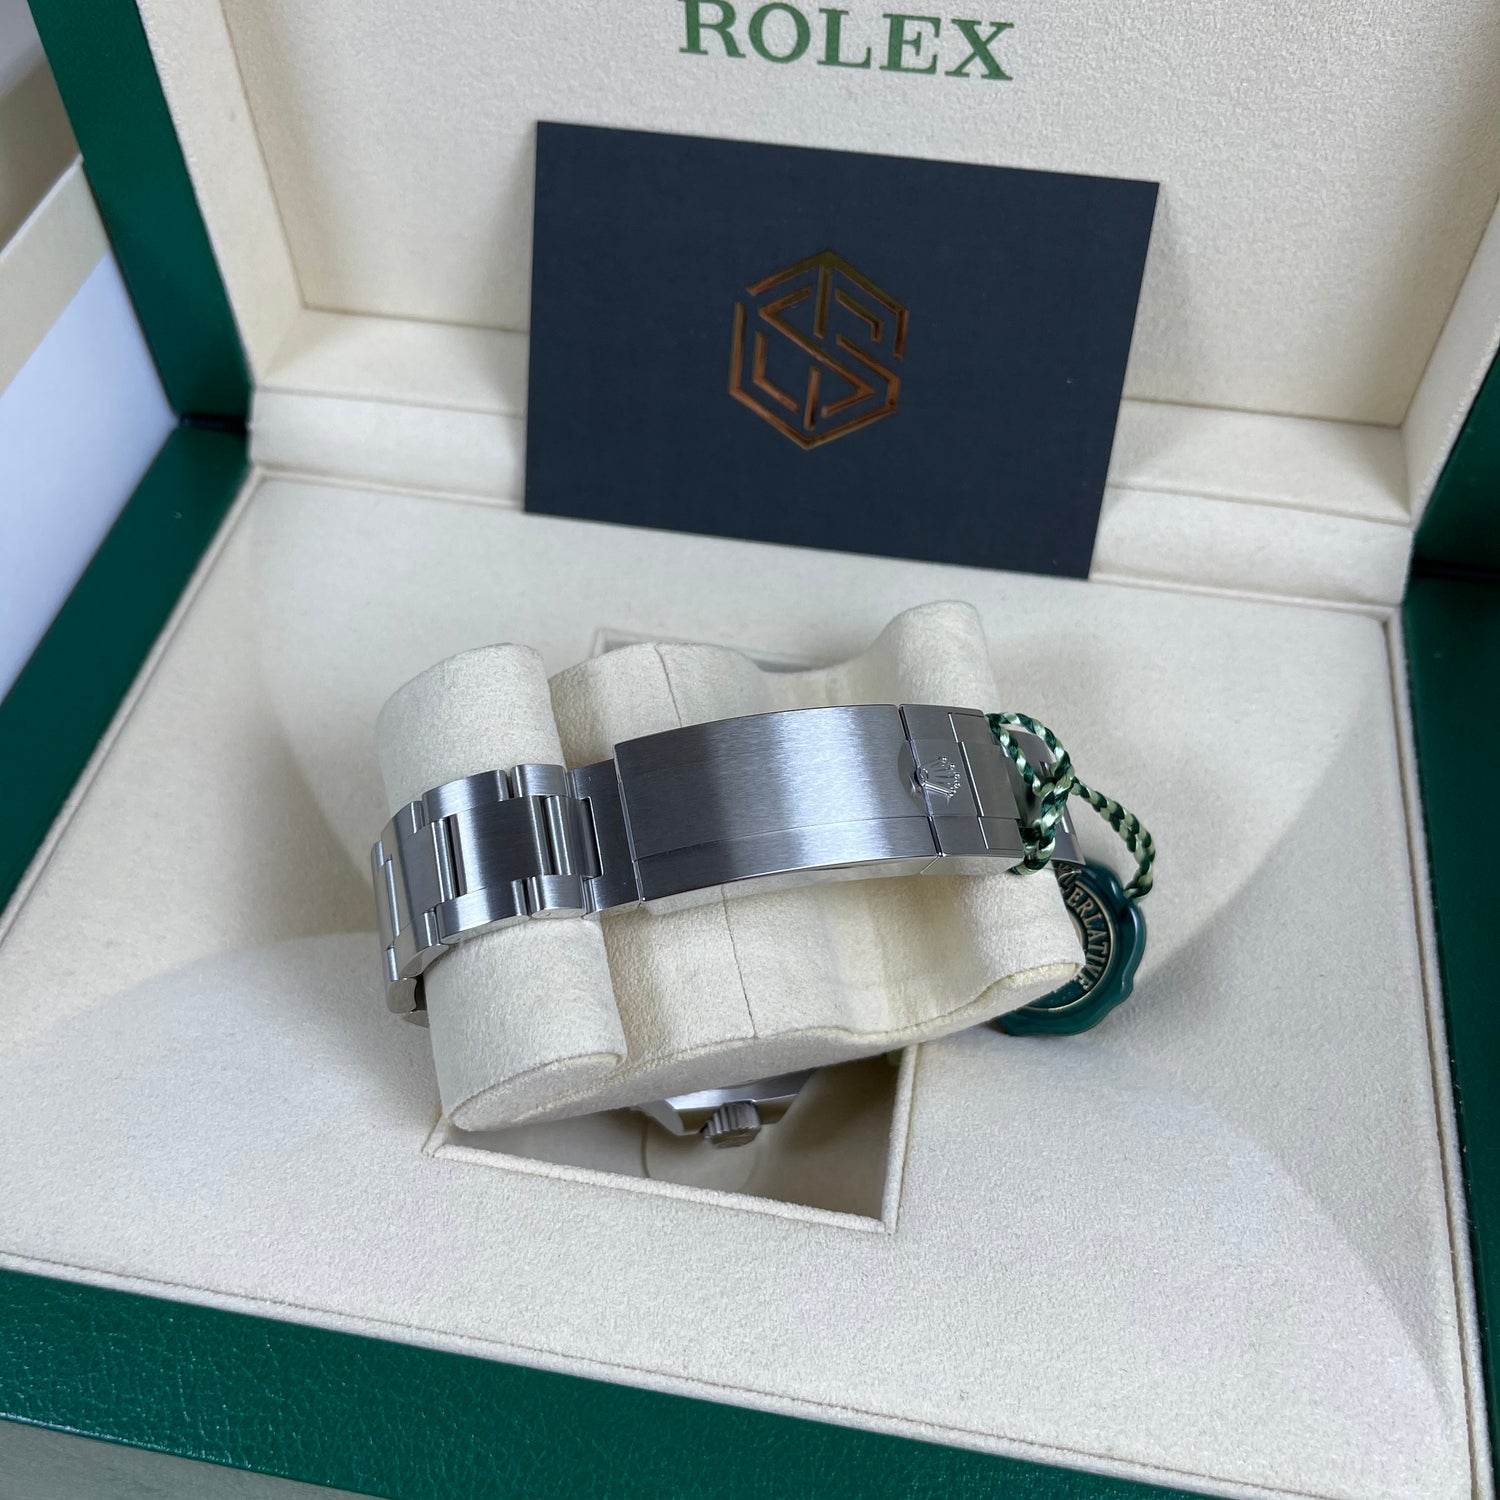 Rolex Deep Sea James Cameron 126660 2021 Brand New Full Set Watch